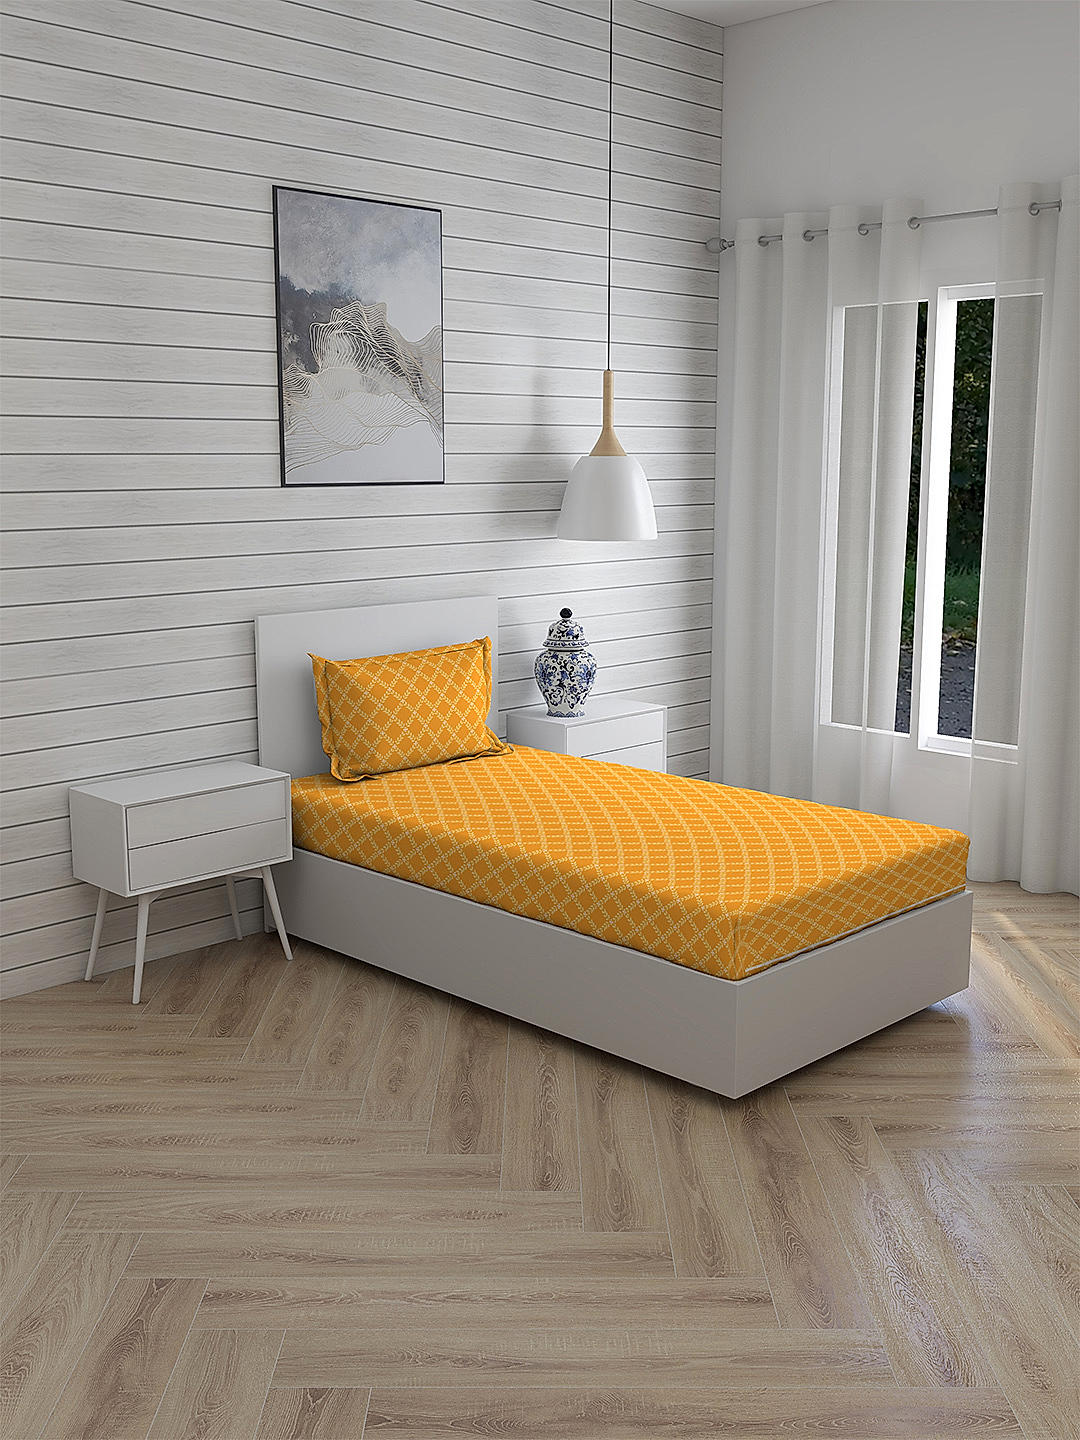 Iris Gaze-1 100% cotton Fine Yellow Colored Ethnic Print Single Bed Sheet Set